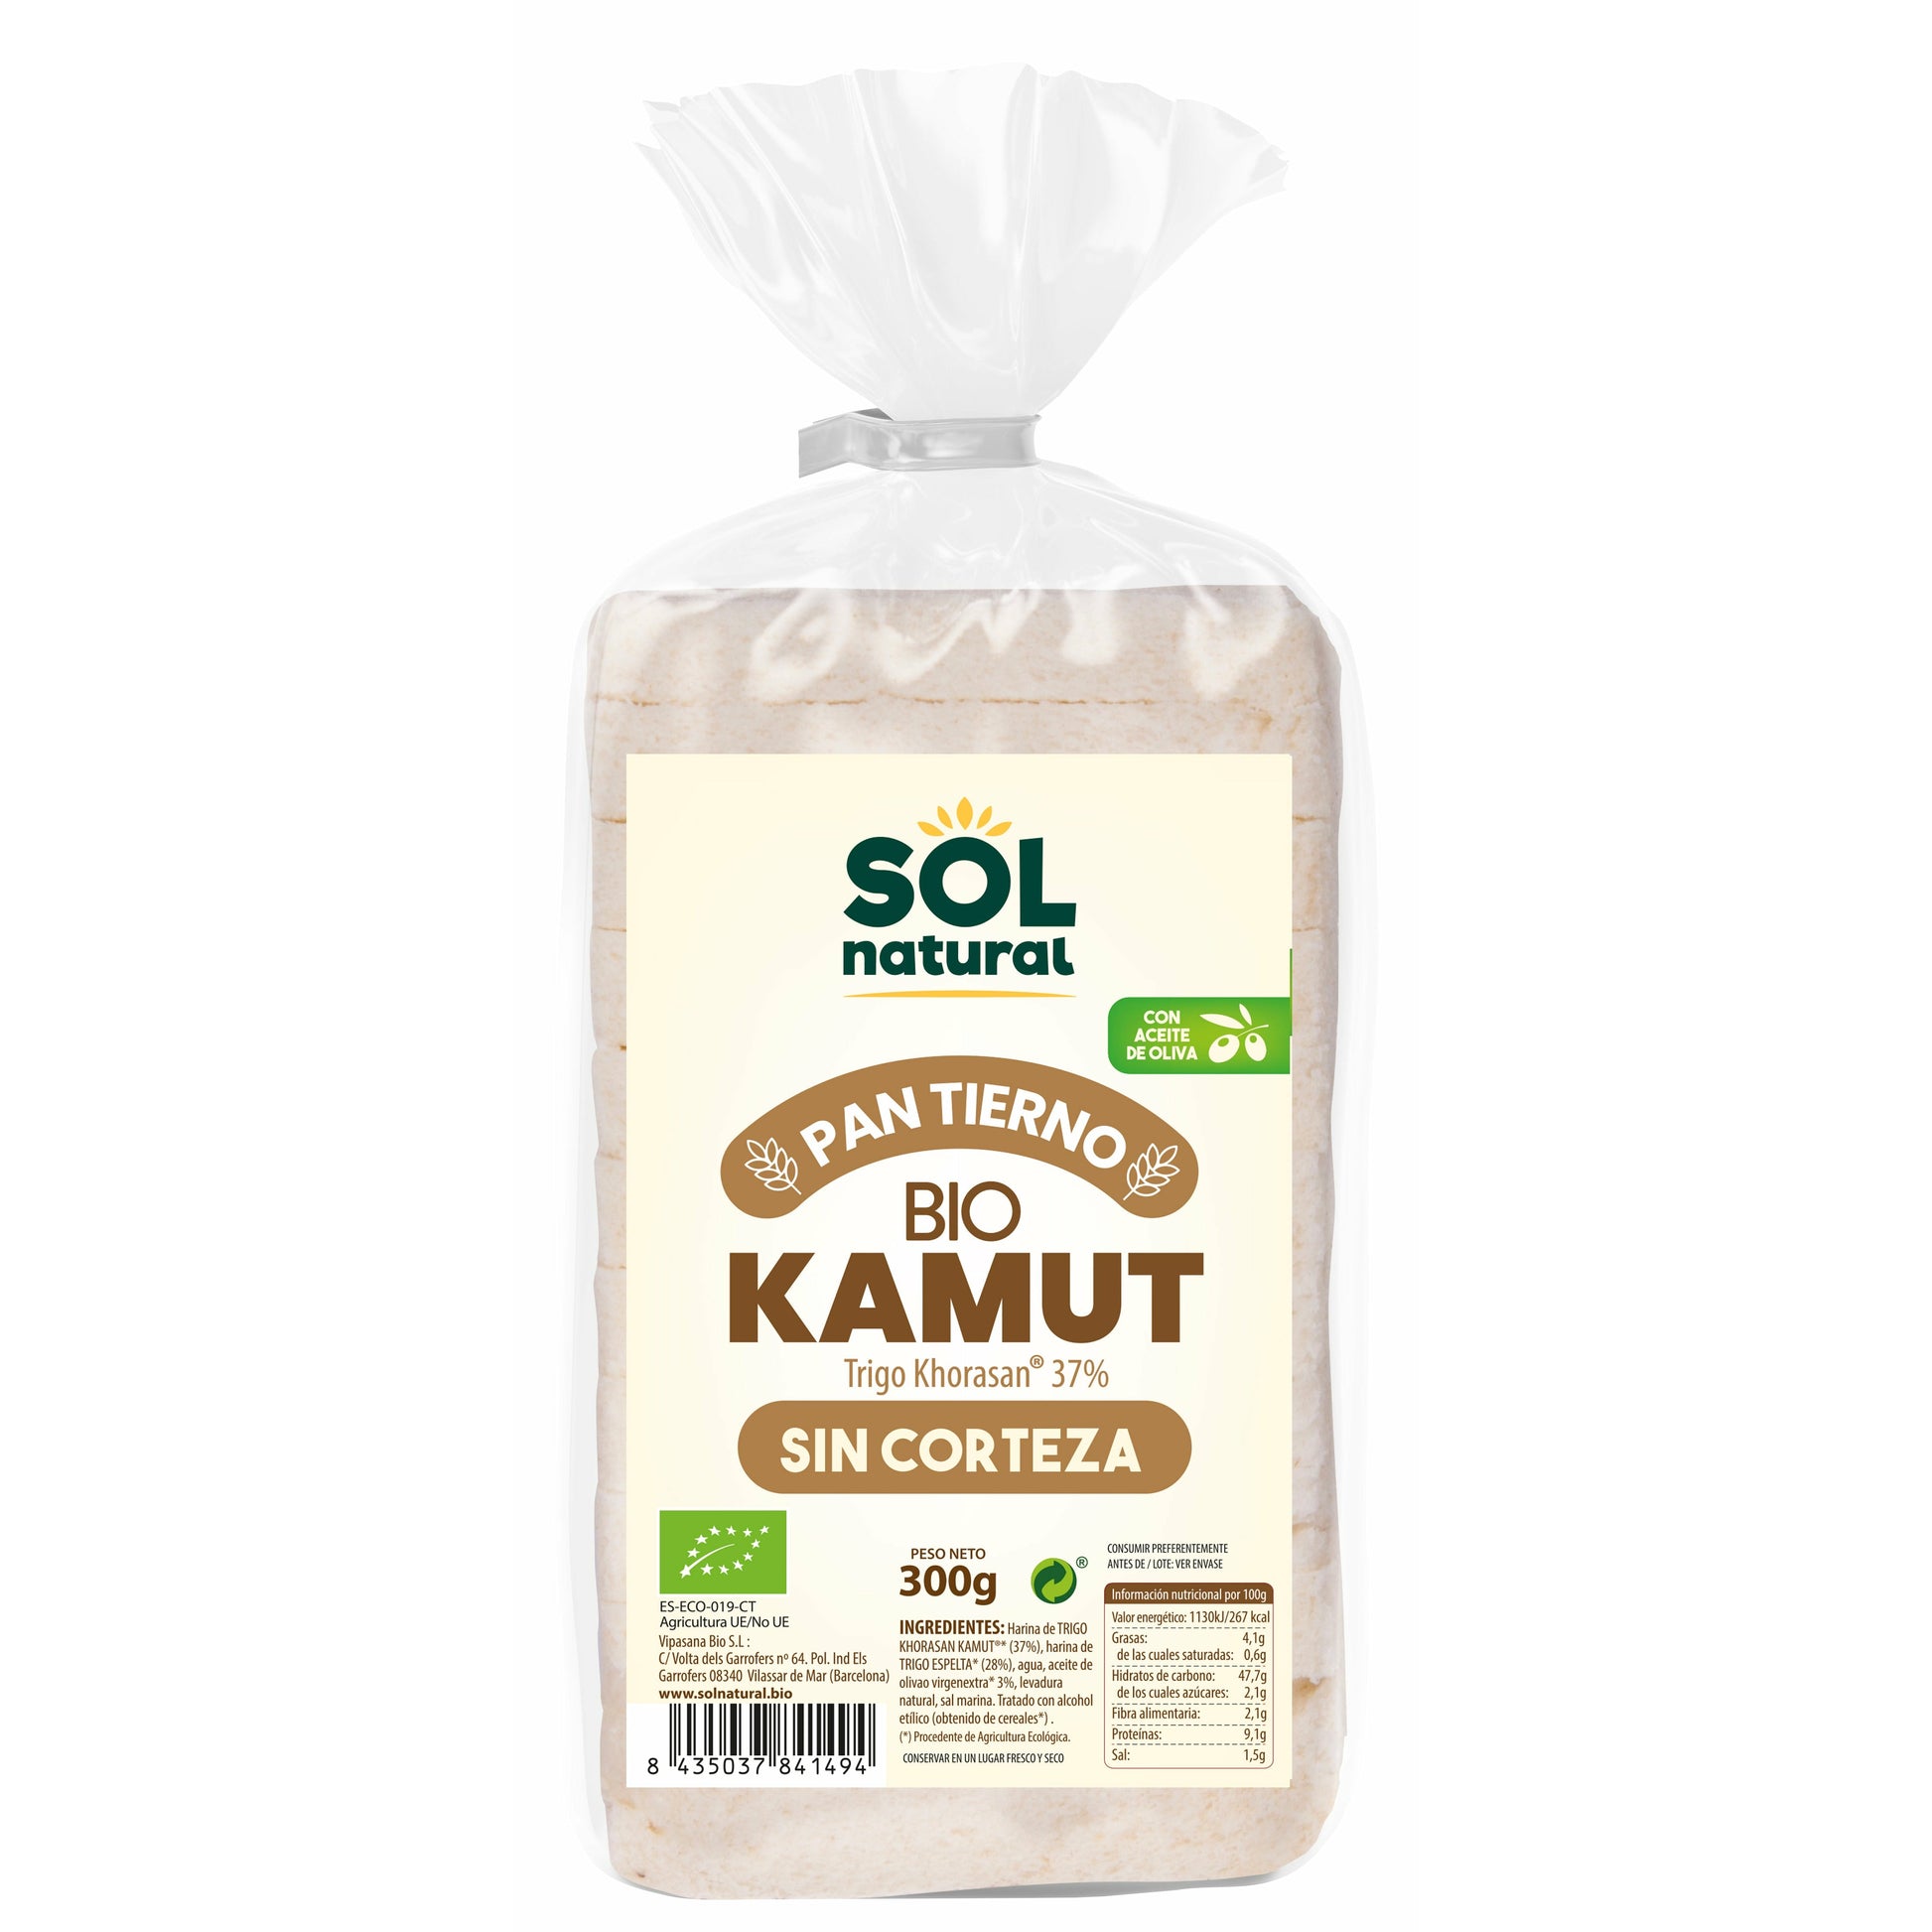 Pan Tierno de Kamut sin Corteza Bio 300 gr | Sol Natural - Dietetica Ferrer